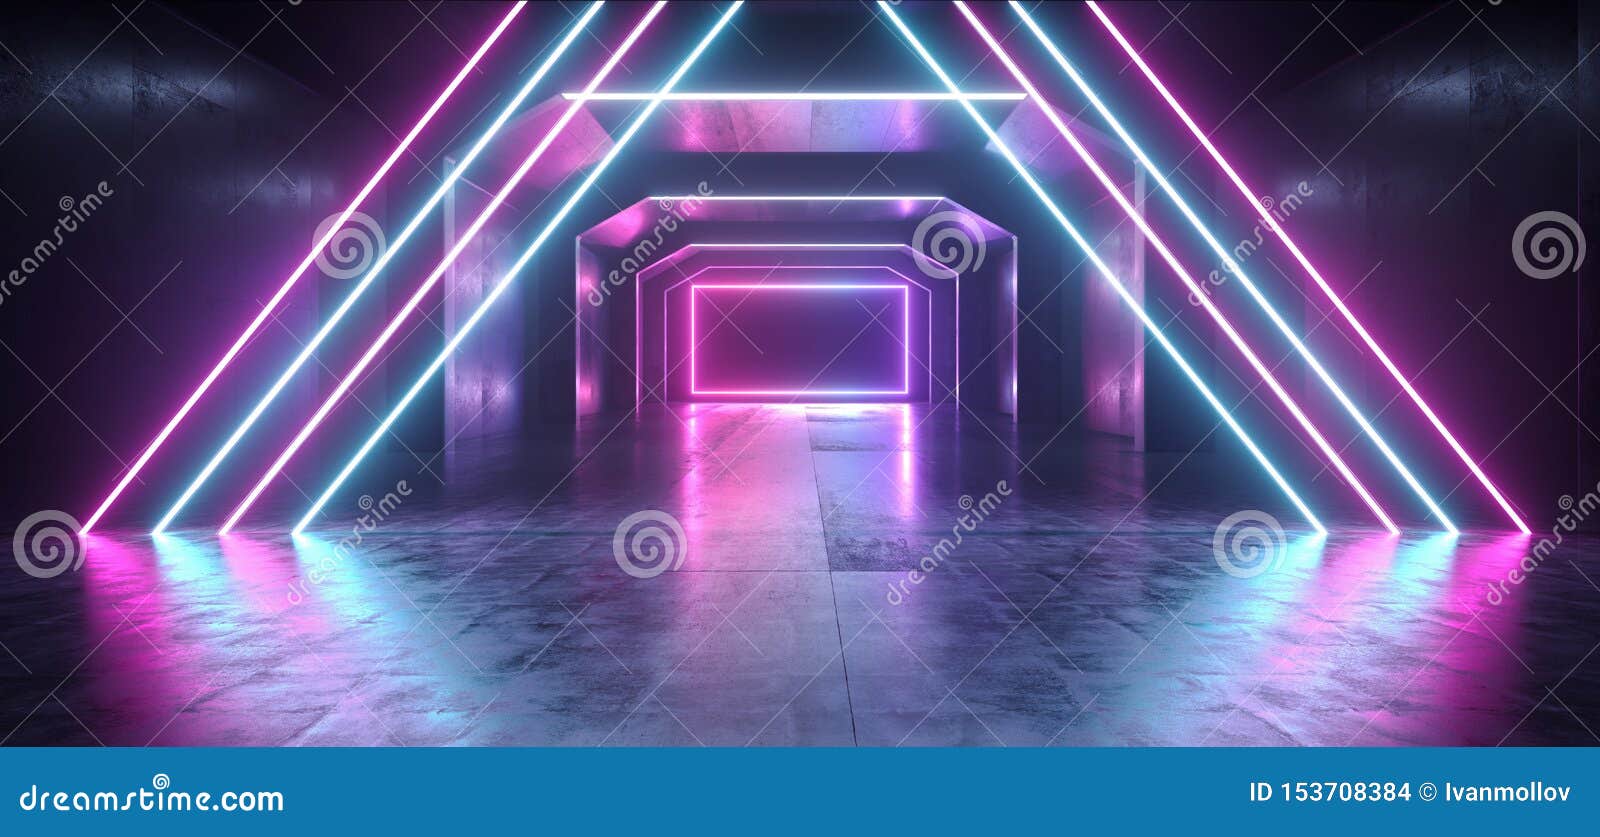 futuristic  sci fi laser neon s glowing light vibrant purple blue stage night club background grunge concrete dark tunnel